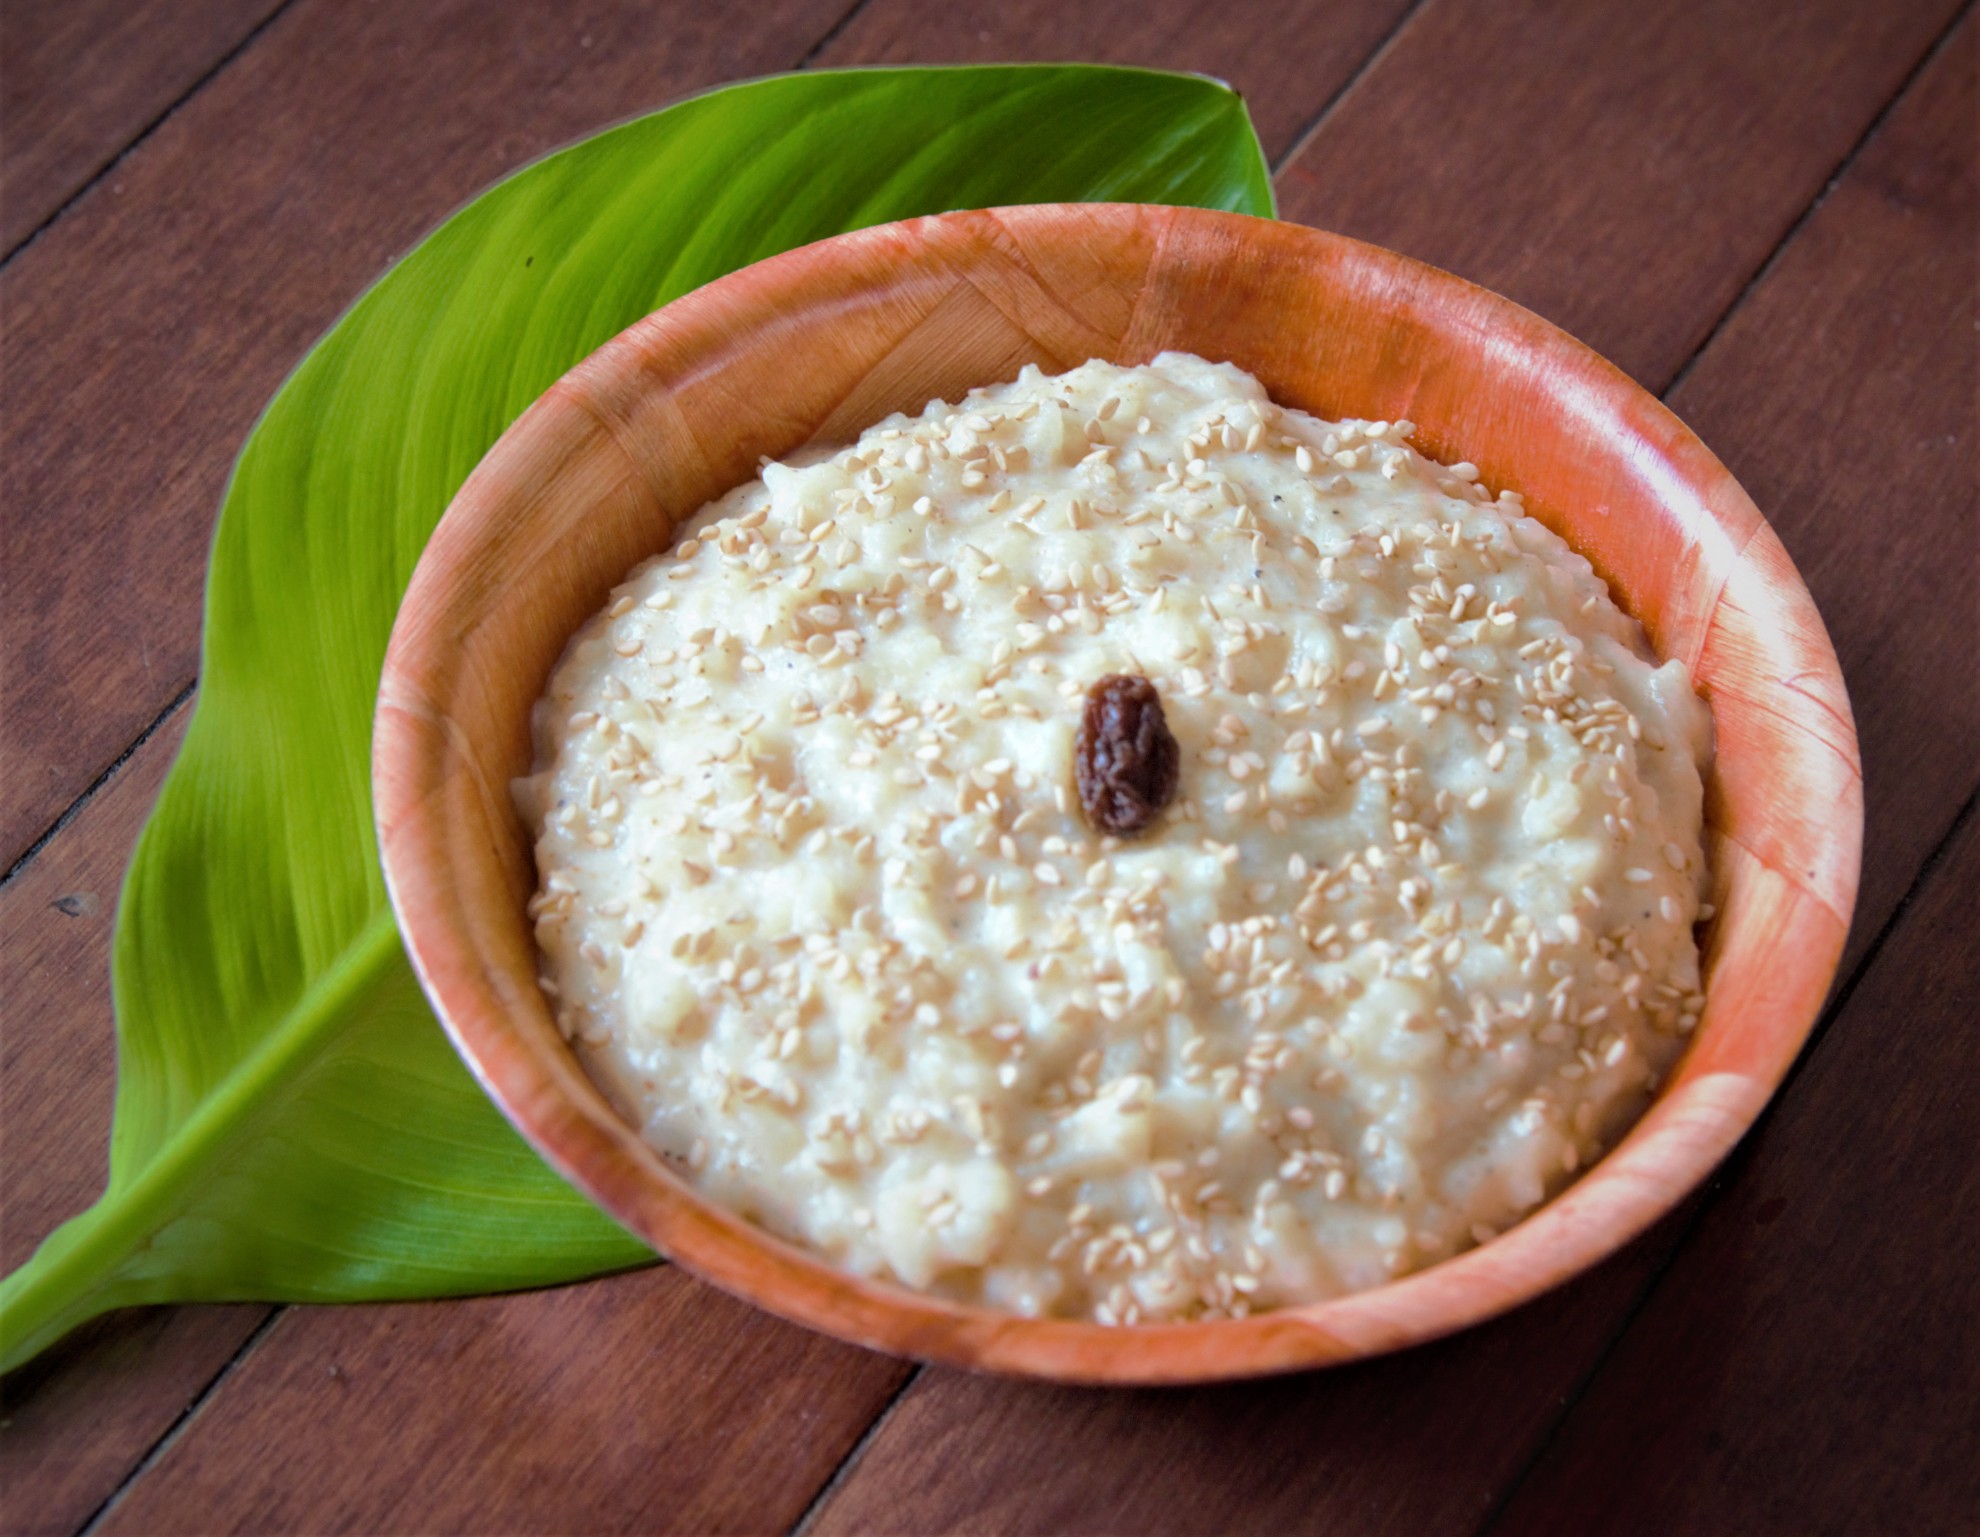 Nuvvula Pulagam | Nuvvula Paramannam | Rice and Sesame Seeds Porridge - Sankranti Special